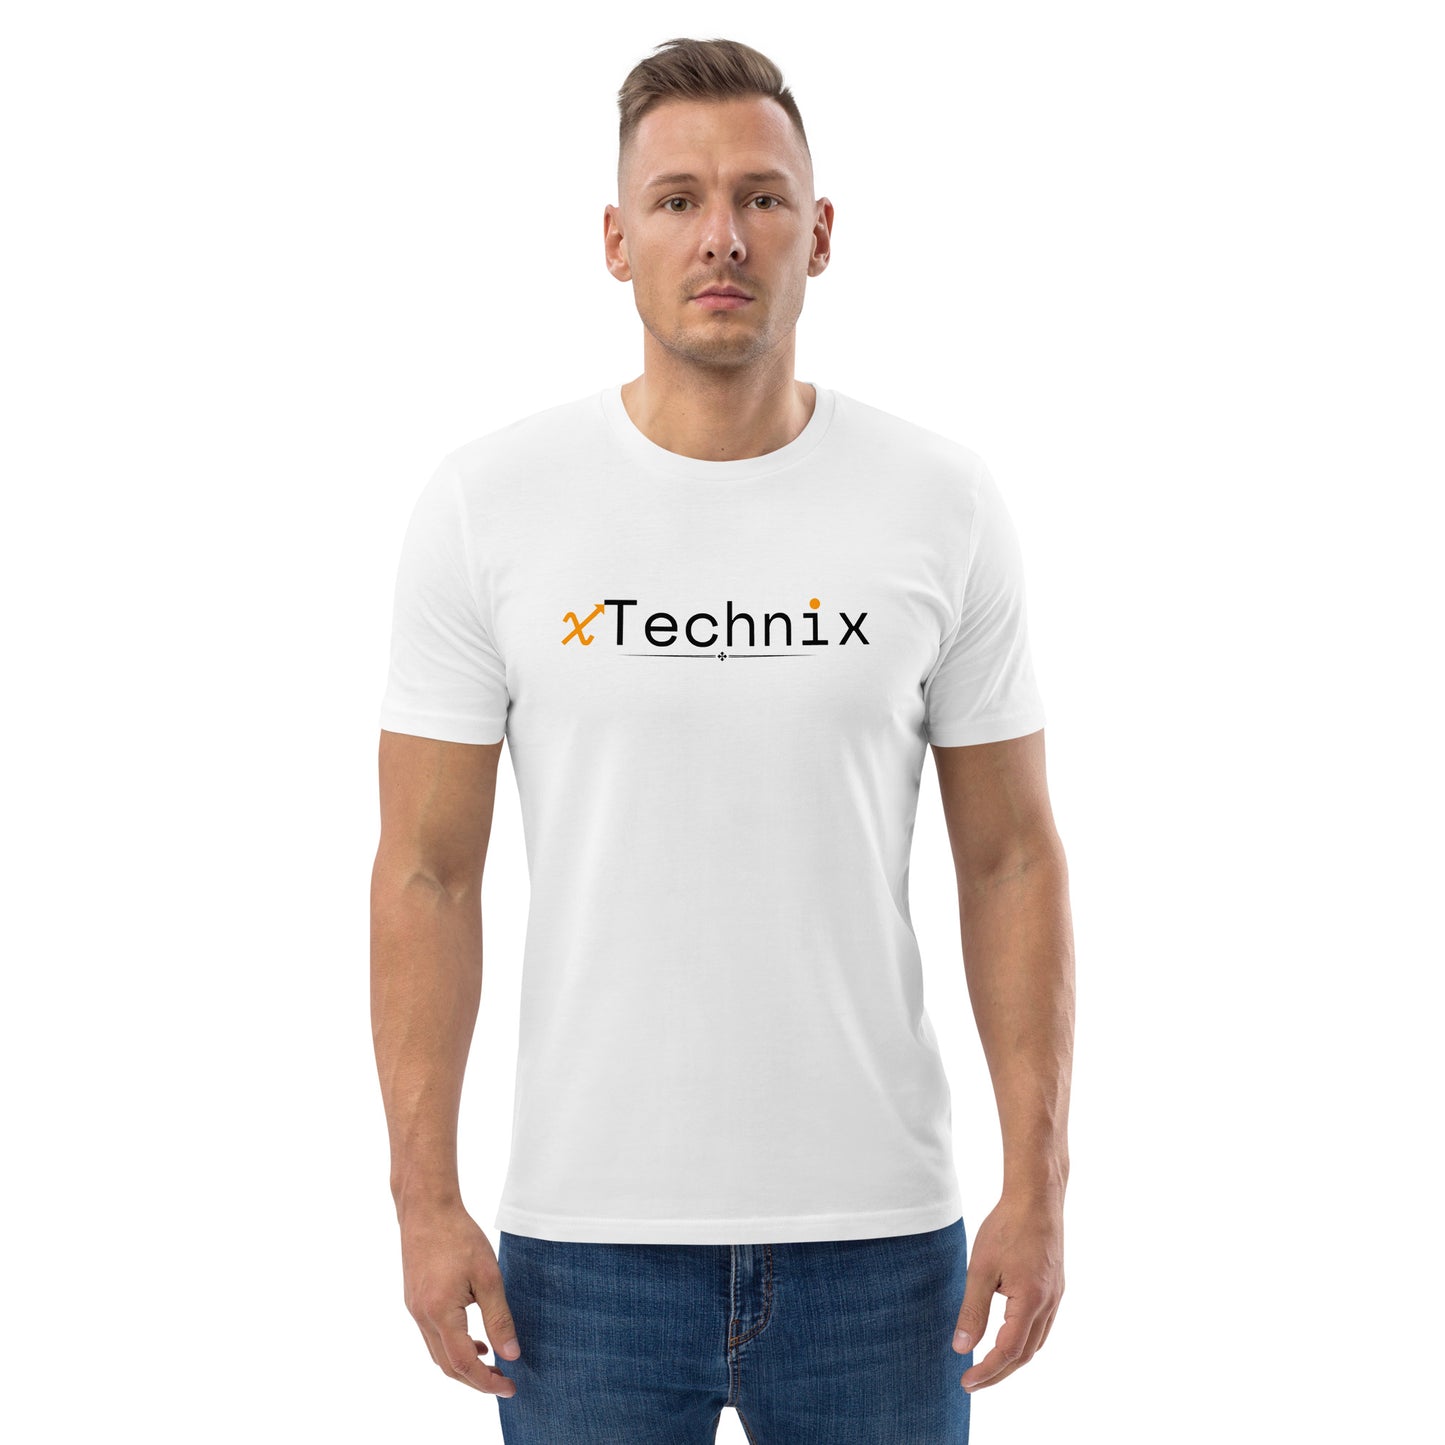 xTechnix Unisex eco friendly organic cotton t-shirt